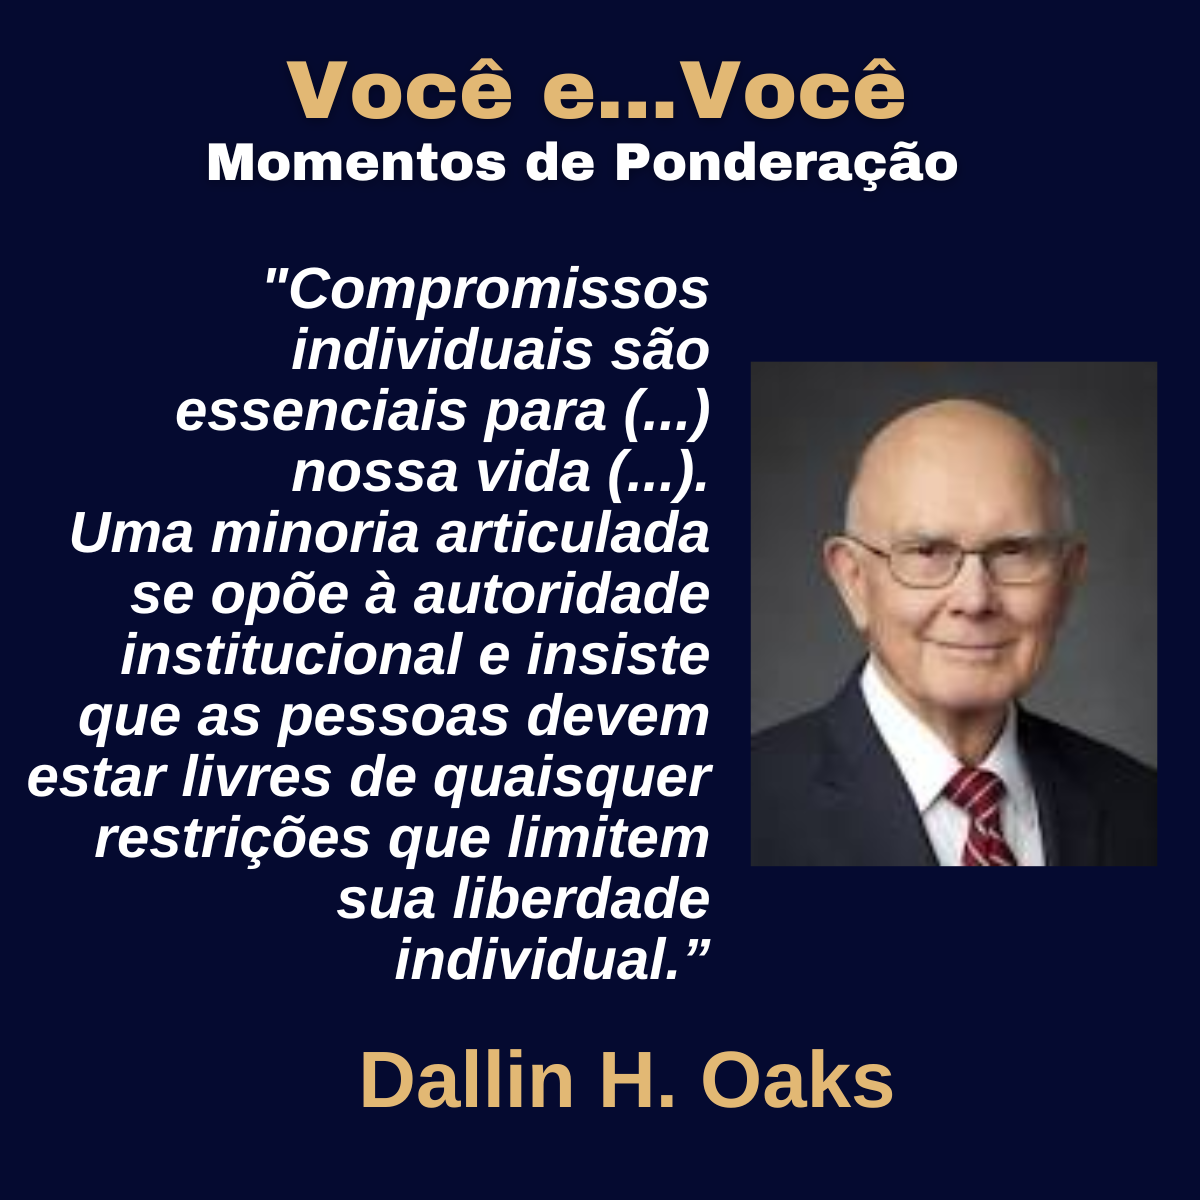 dallin-h-oaks-7